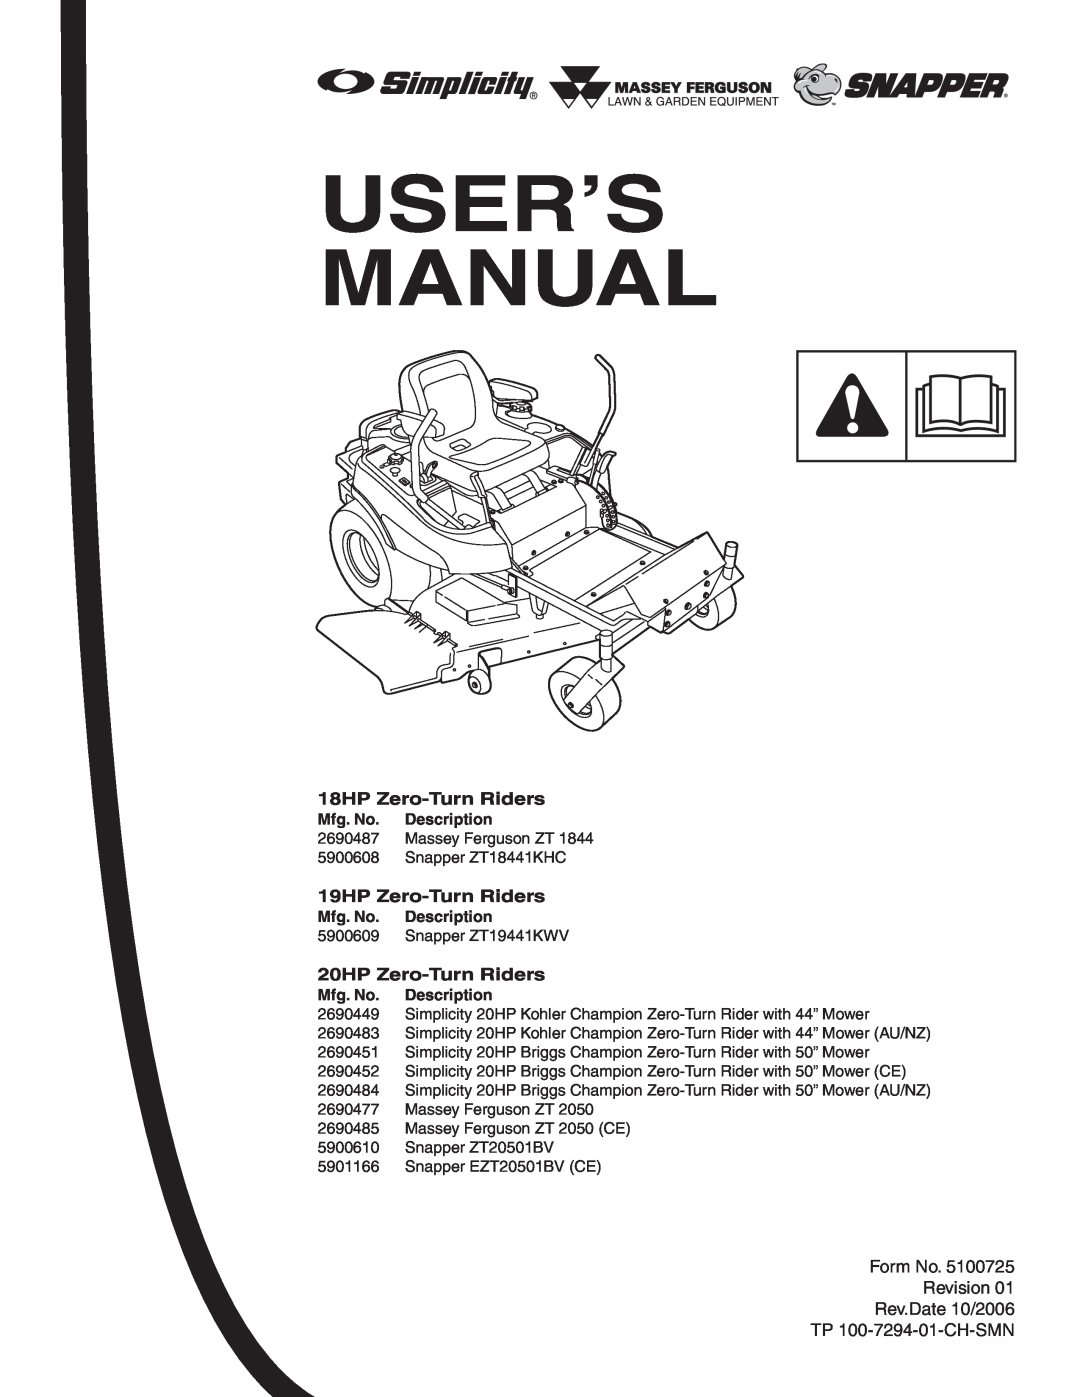 Snapper 20HP, 19HP, 18HP user manual User’S Manual, Mfg. No. Description 